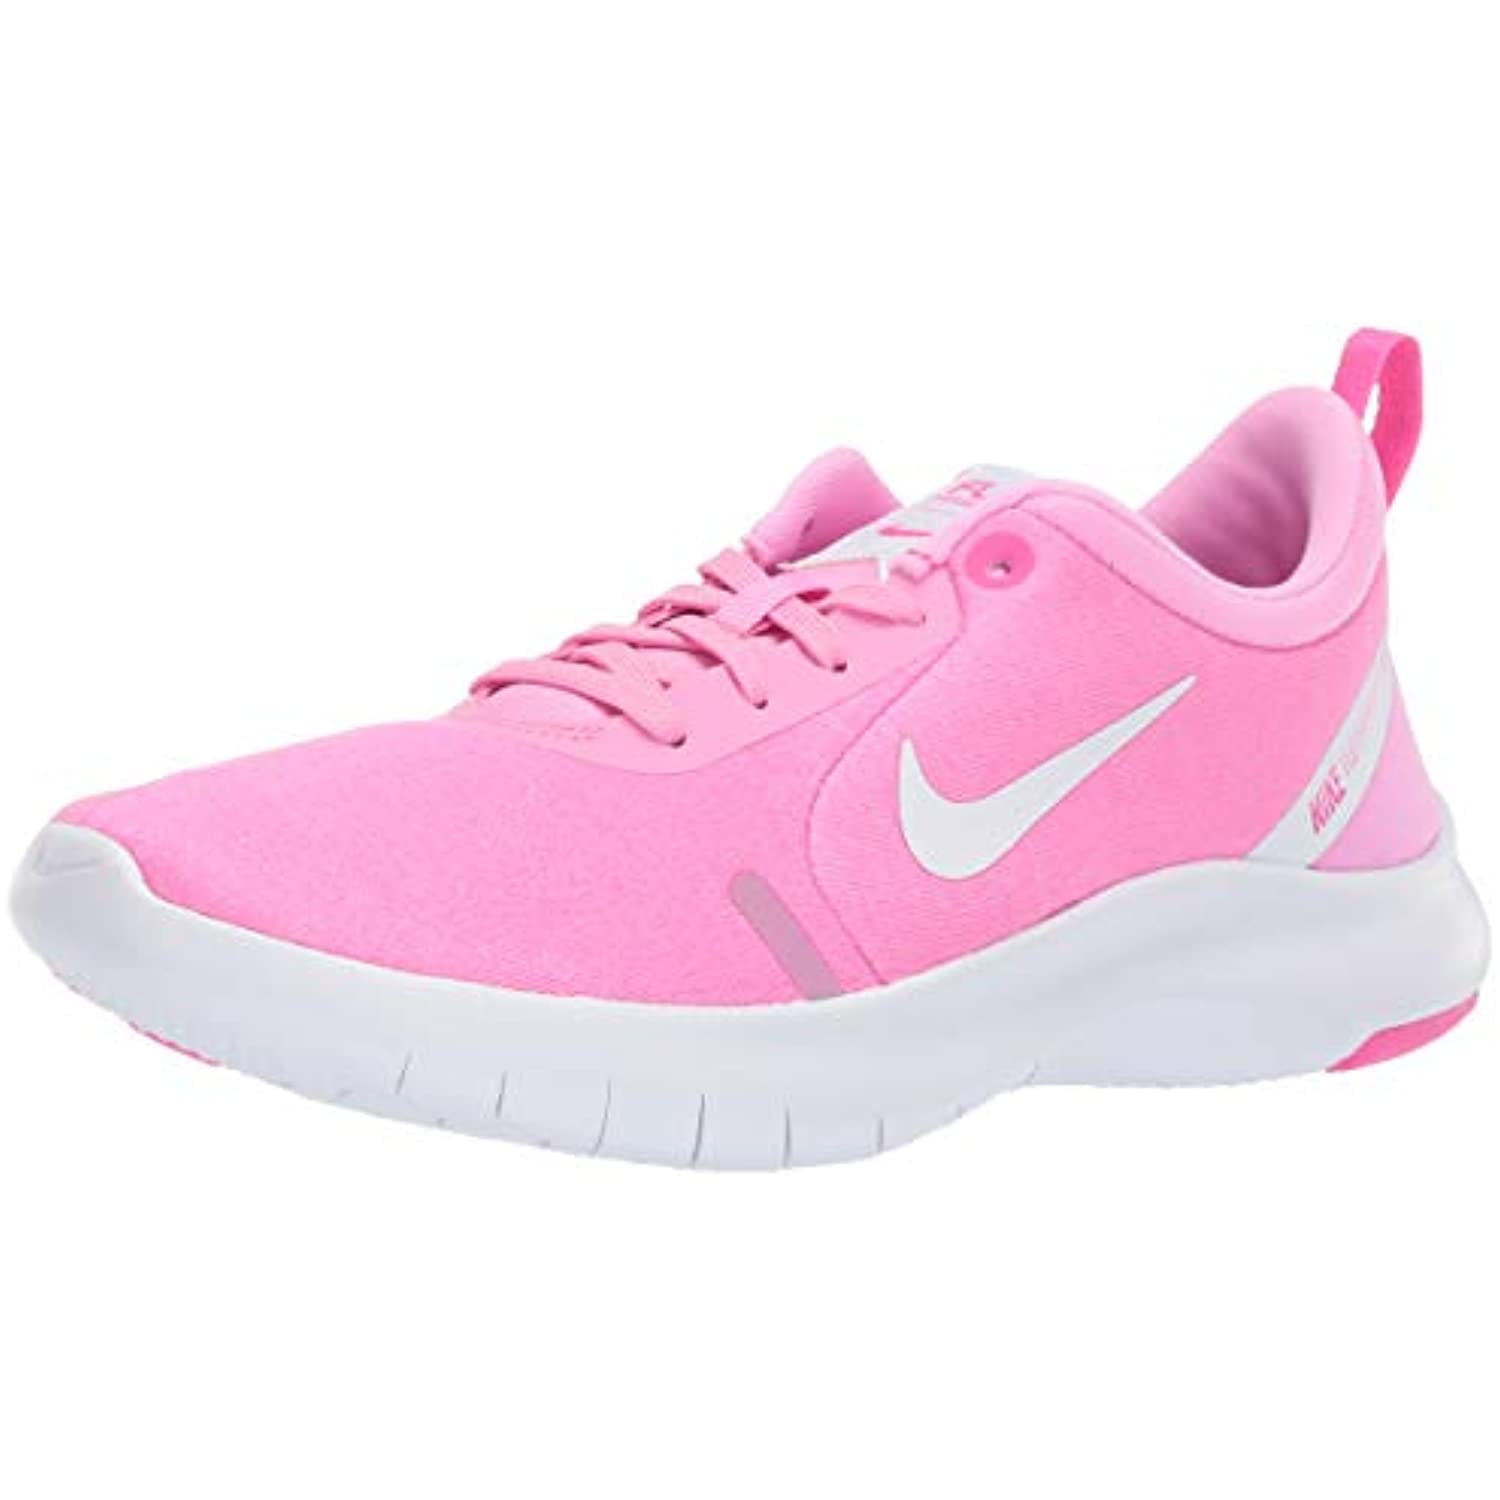 Nike Women's Flex Experience Run Shoe, Psychic Pink/White - Laser Fuchsia, 6.5 Regular Walmart.com